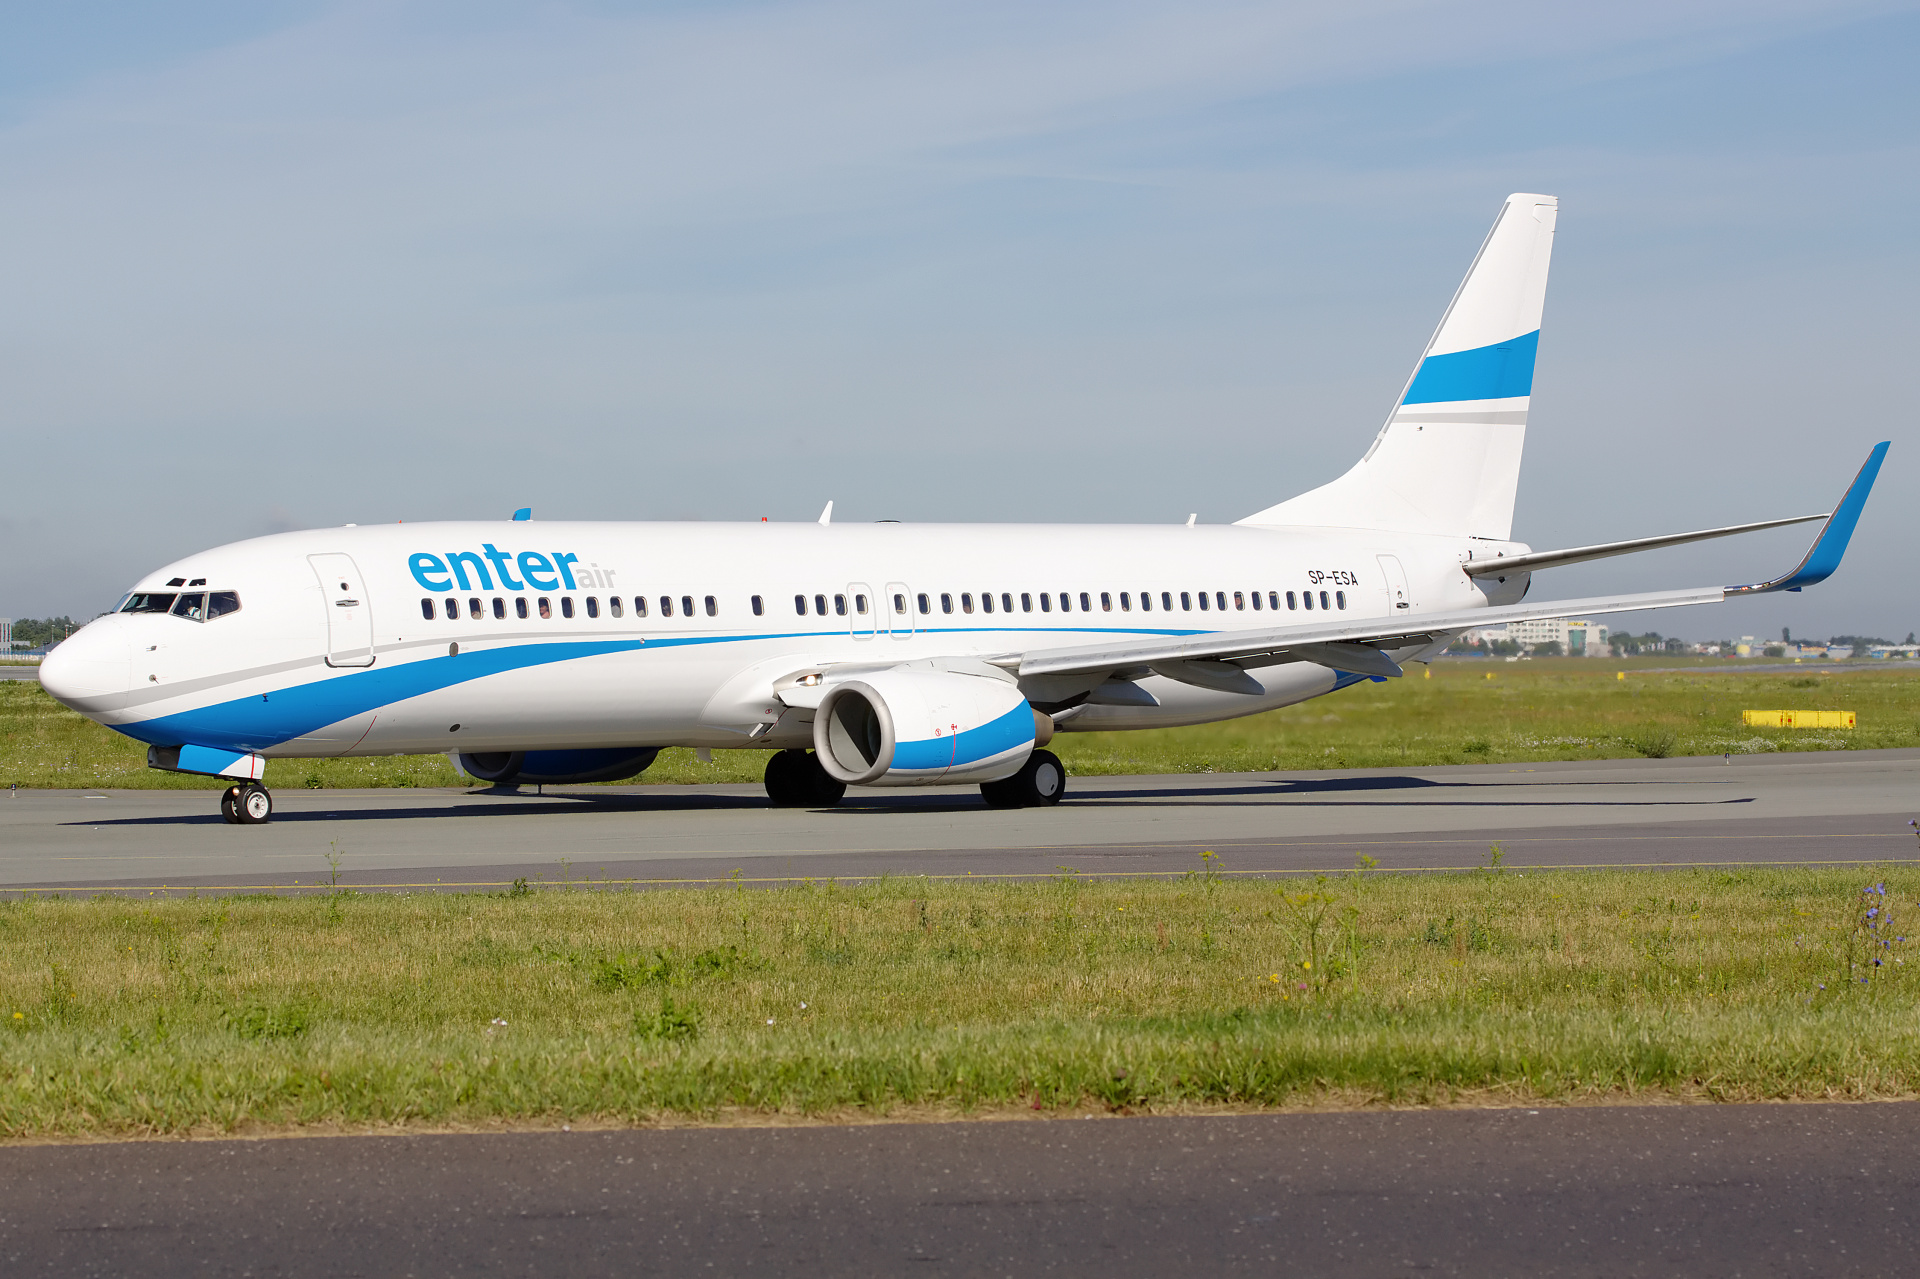 SP-ESA (Aircraft » EPWA Spotting » Boeing 737-800 » Enter Air)